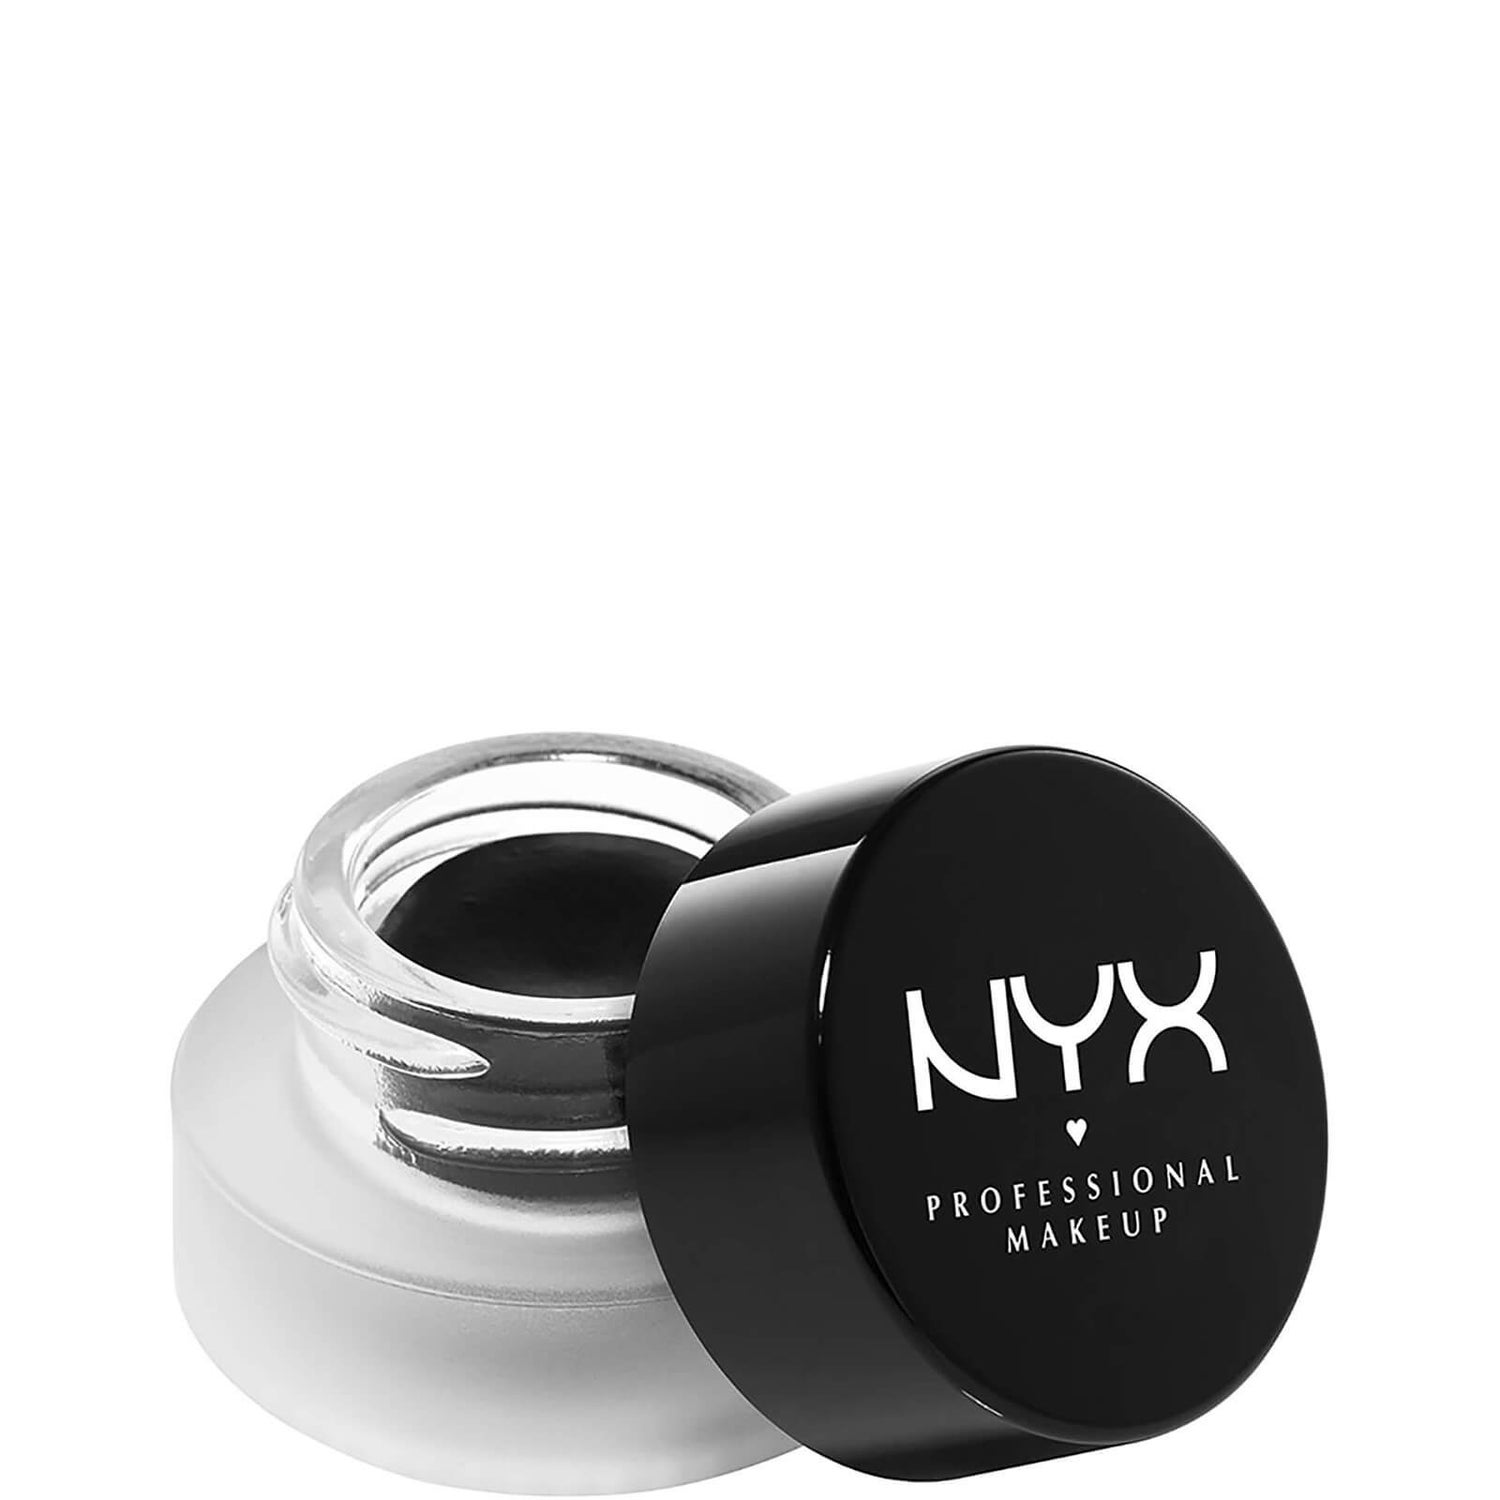 NYX Professional Makeup Epic Black Mousse Liner